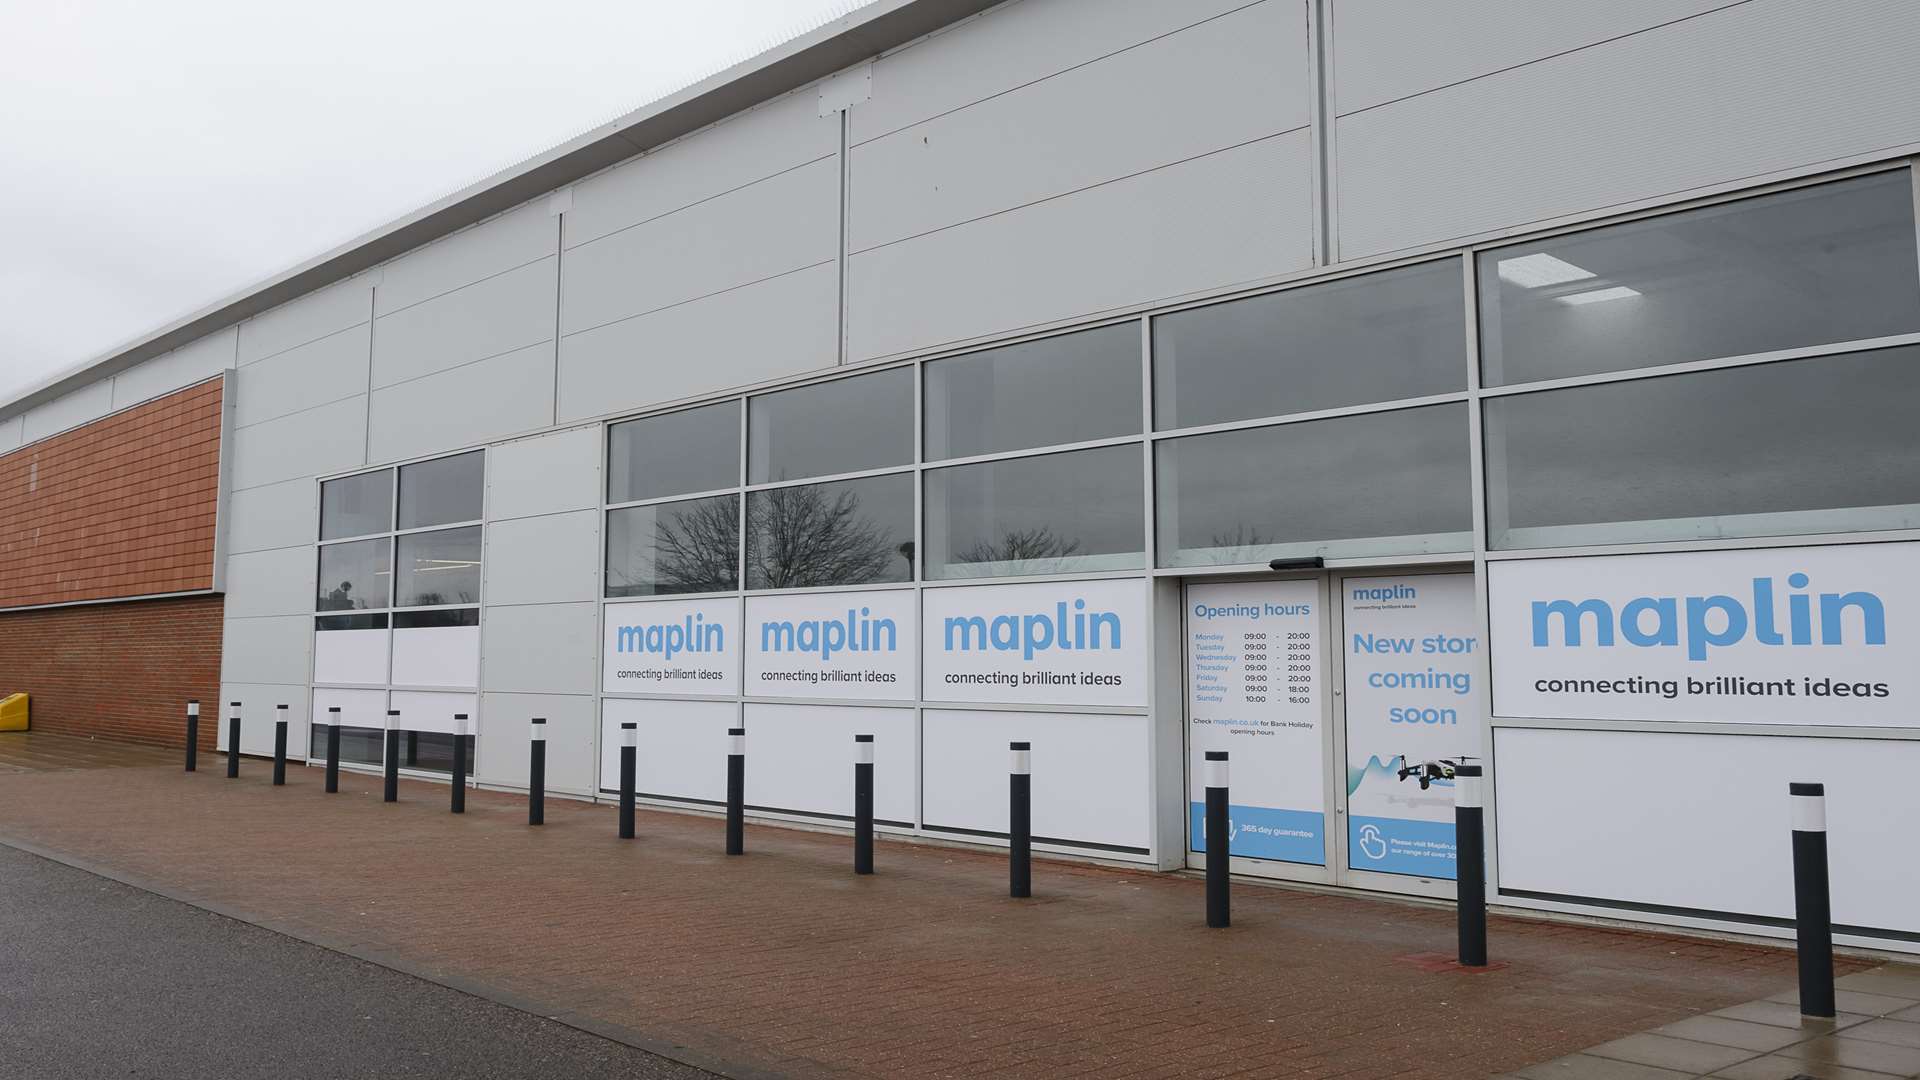 The new Maplin store